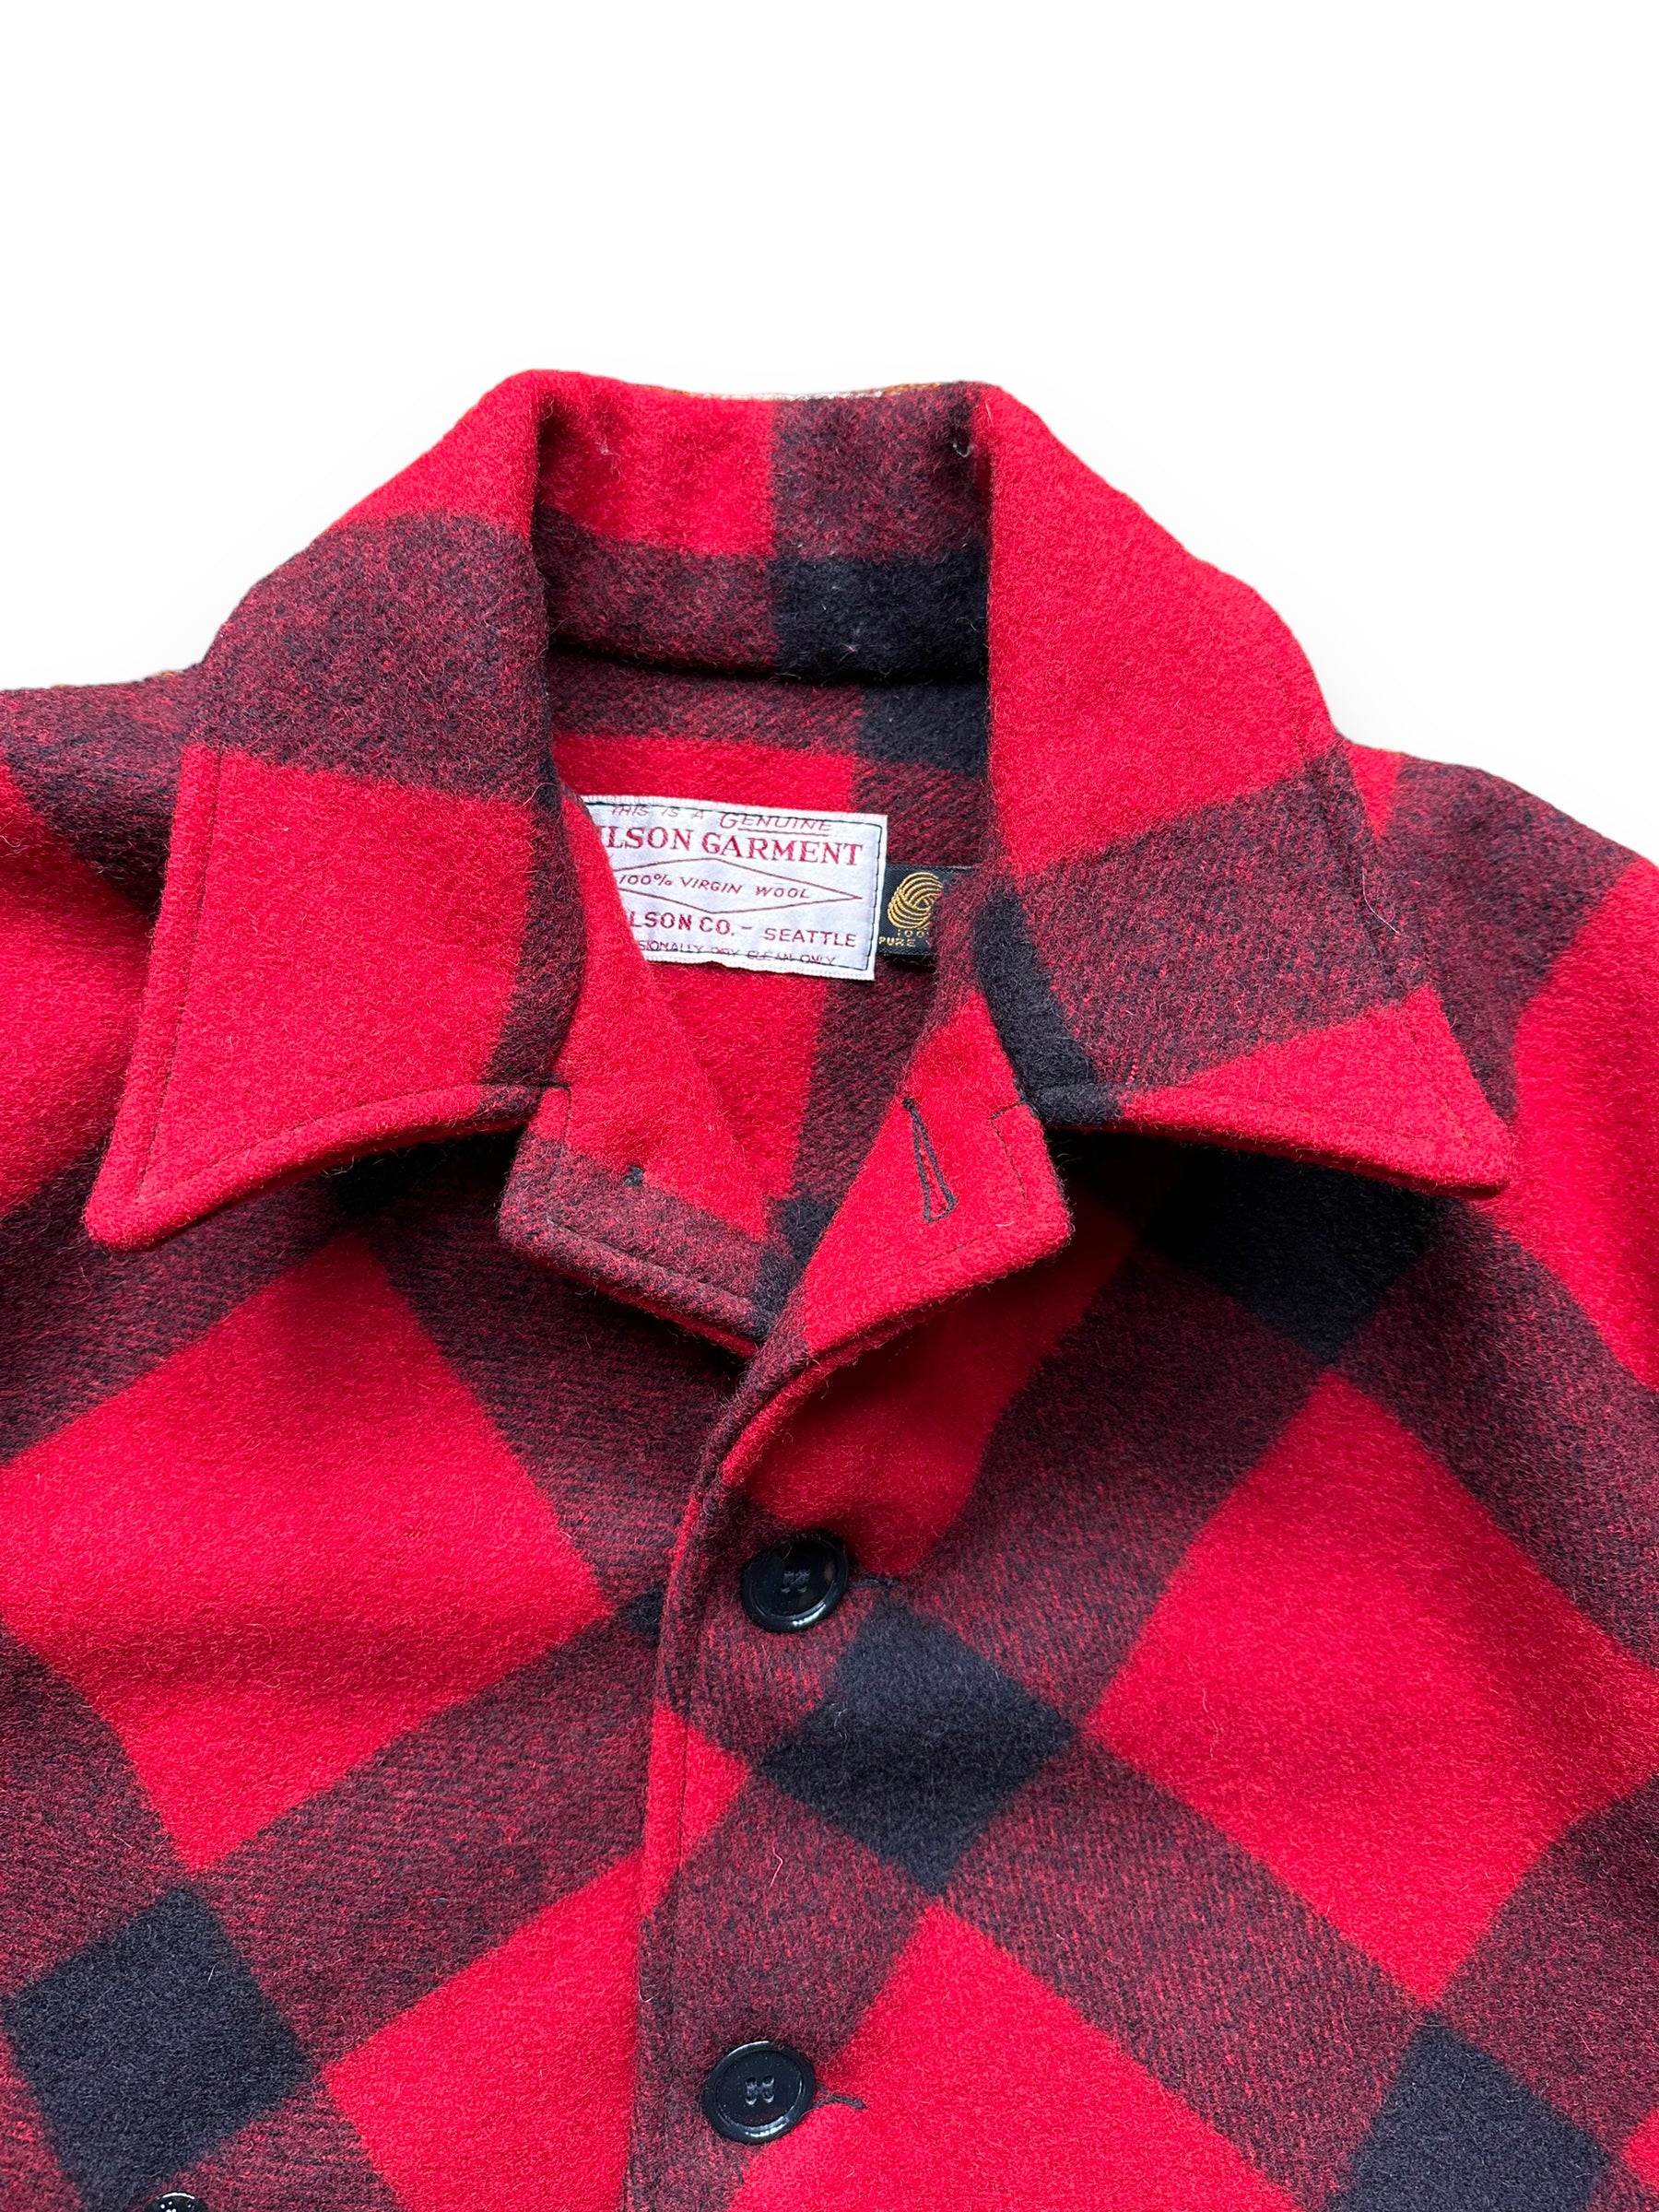 collar of Vintage 80s Filson Double Mackinaw Jacket |  Barn Owl Vintage Goods | Vintage Filson Workwear Seattle